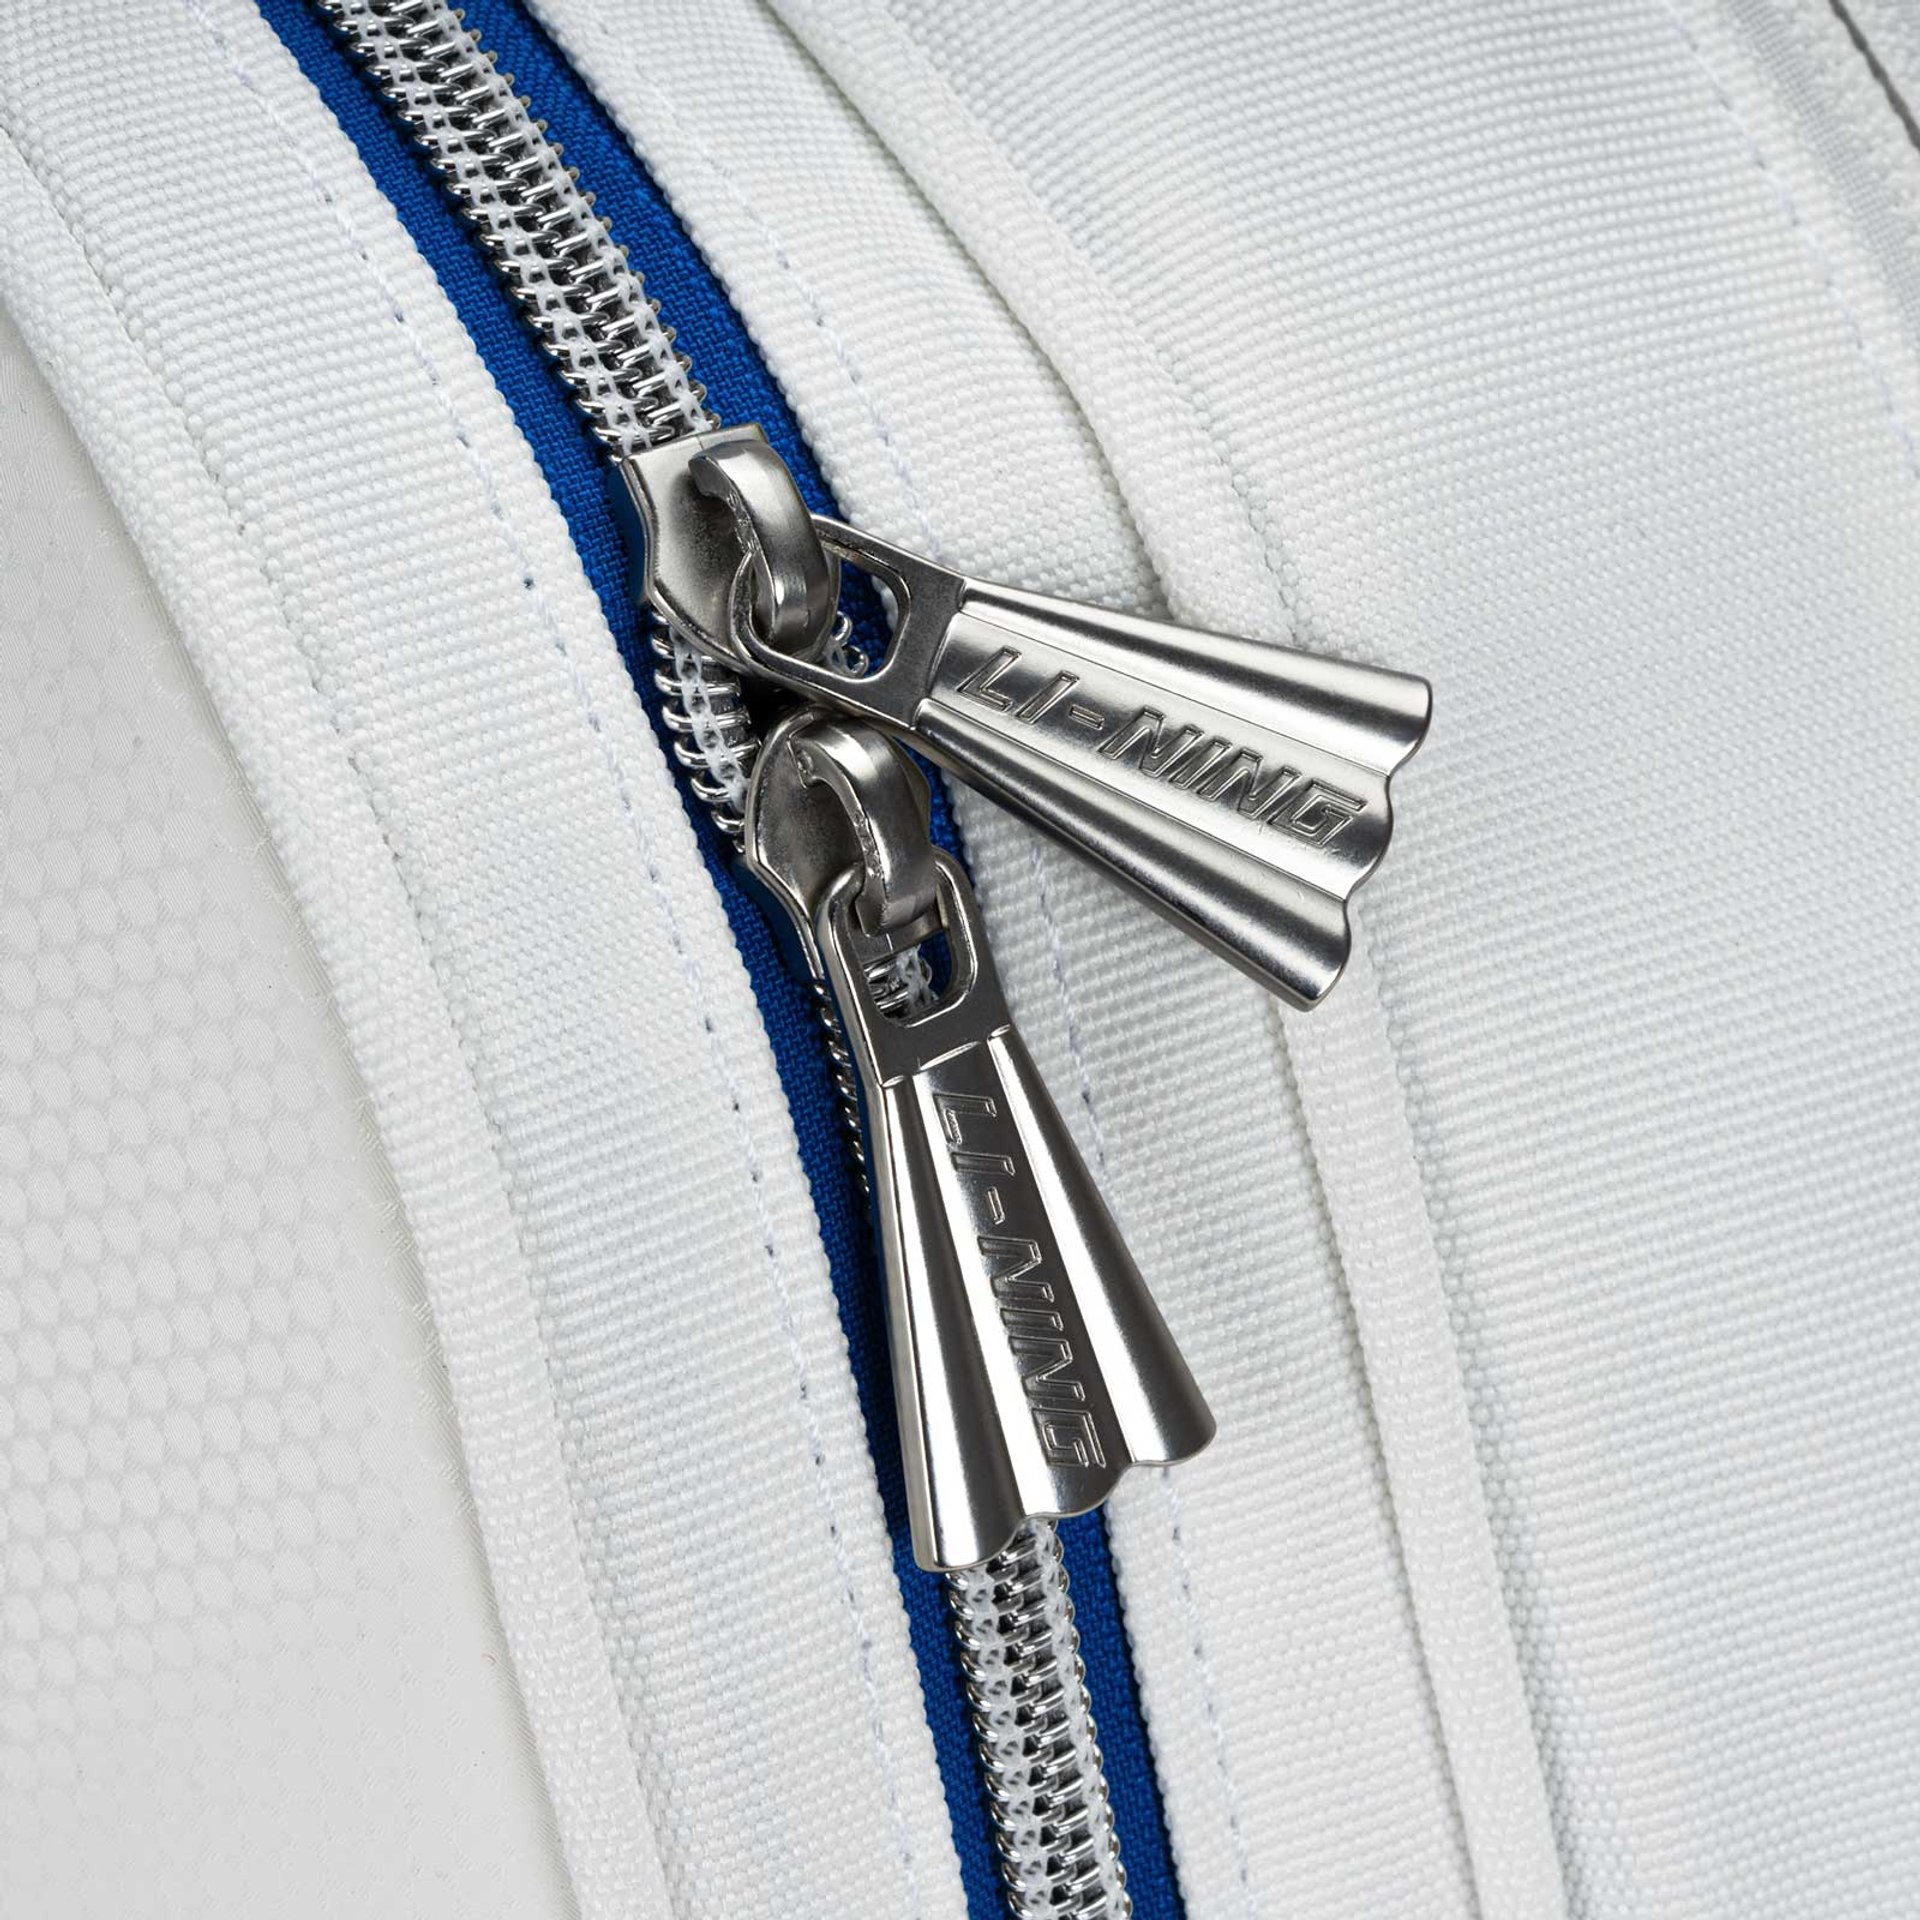 Li-Ning Rectangular Badminton Kit Bag - Zippers